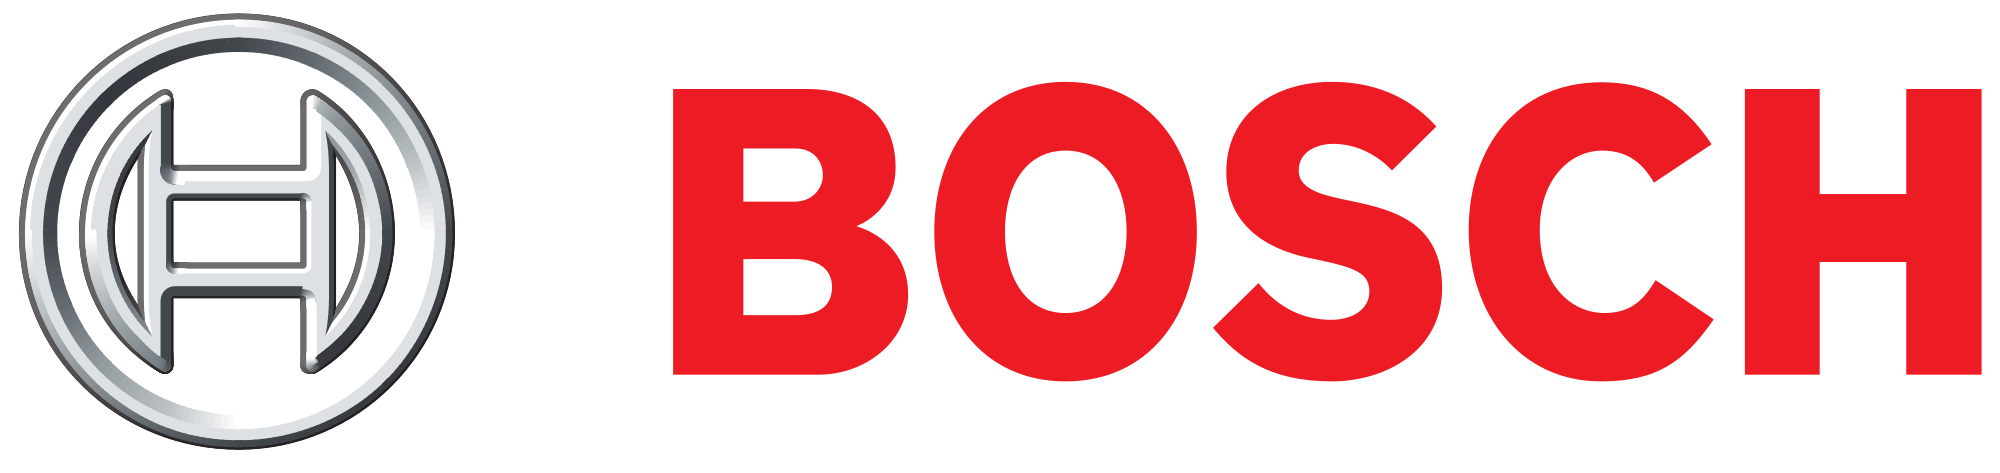 Logo corporativo